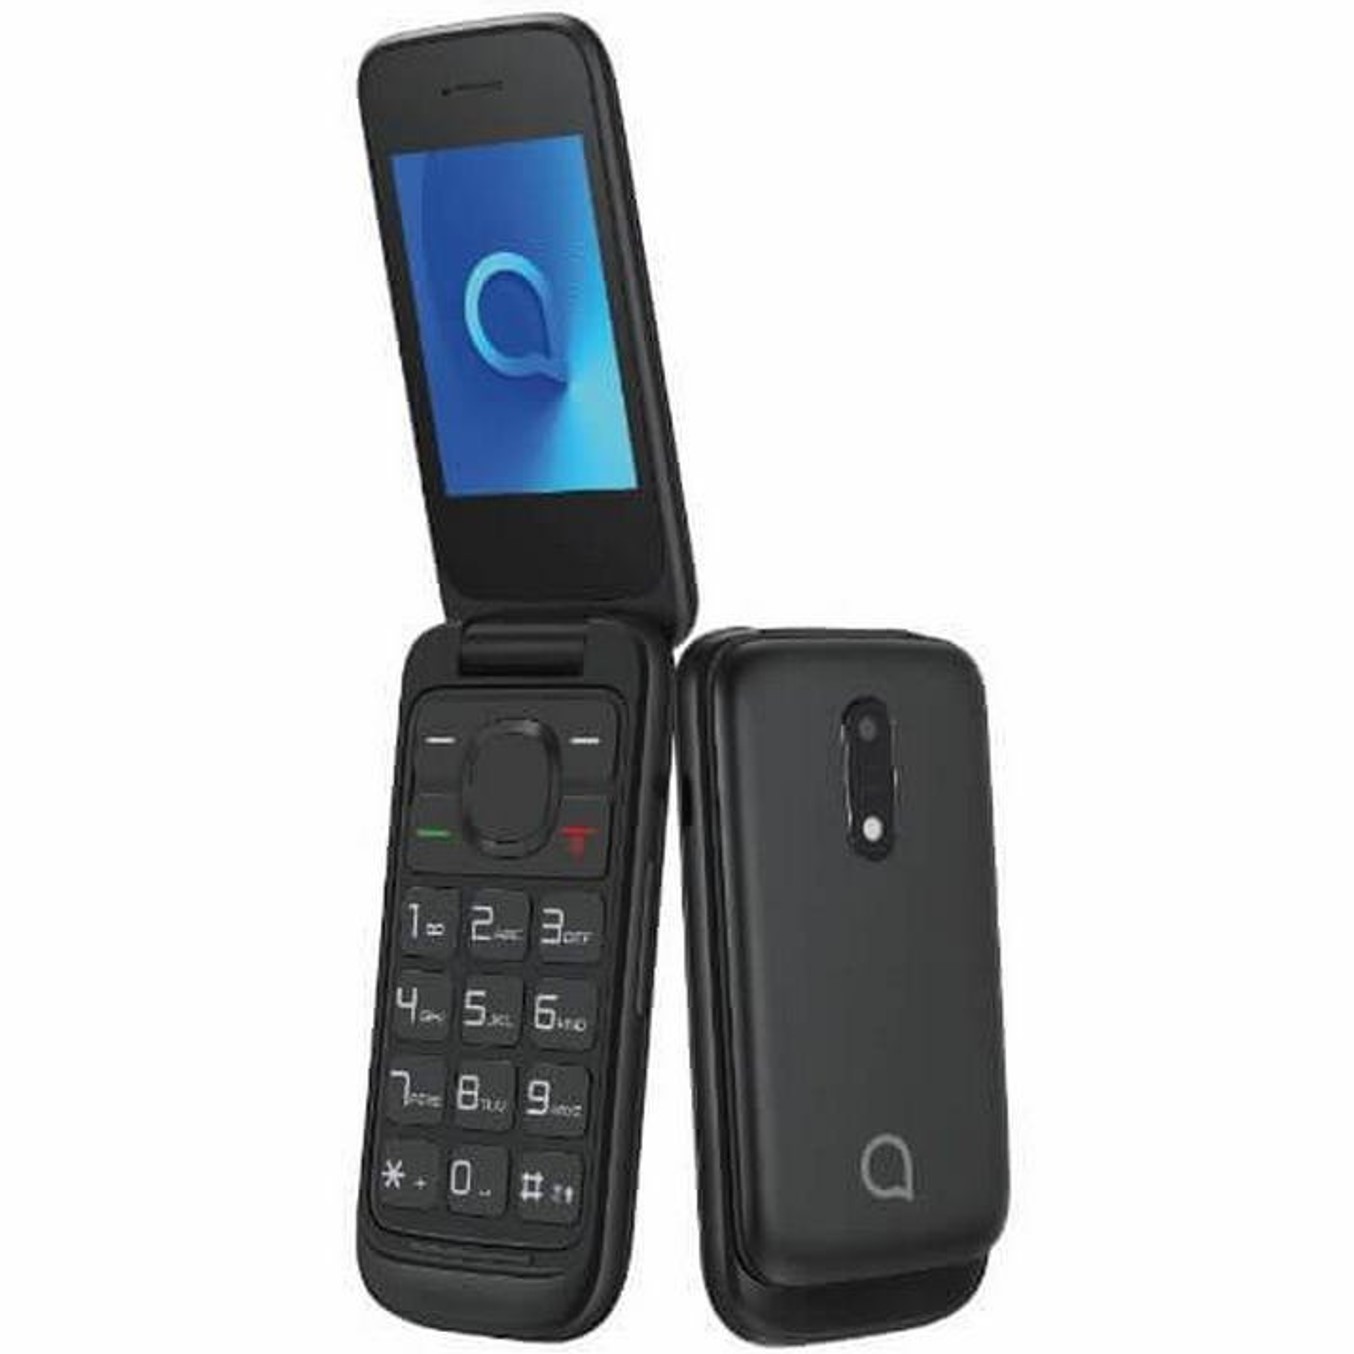 Telefono movil alcatel 2053 negro - 2.4pulgadas - 4mb rom - 4mb ram - dual sim